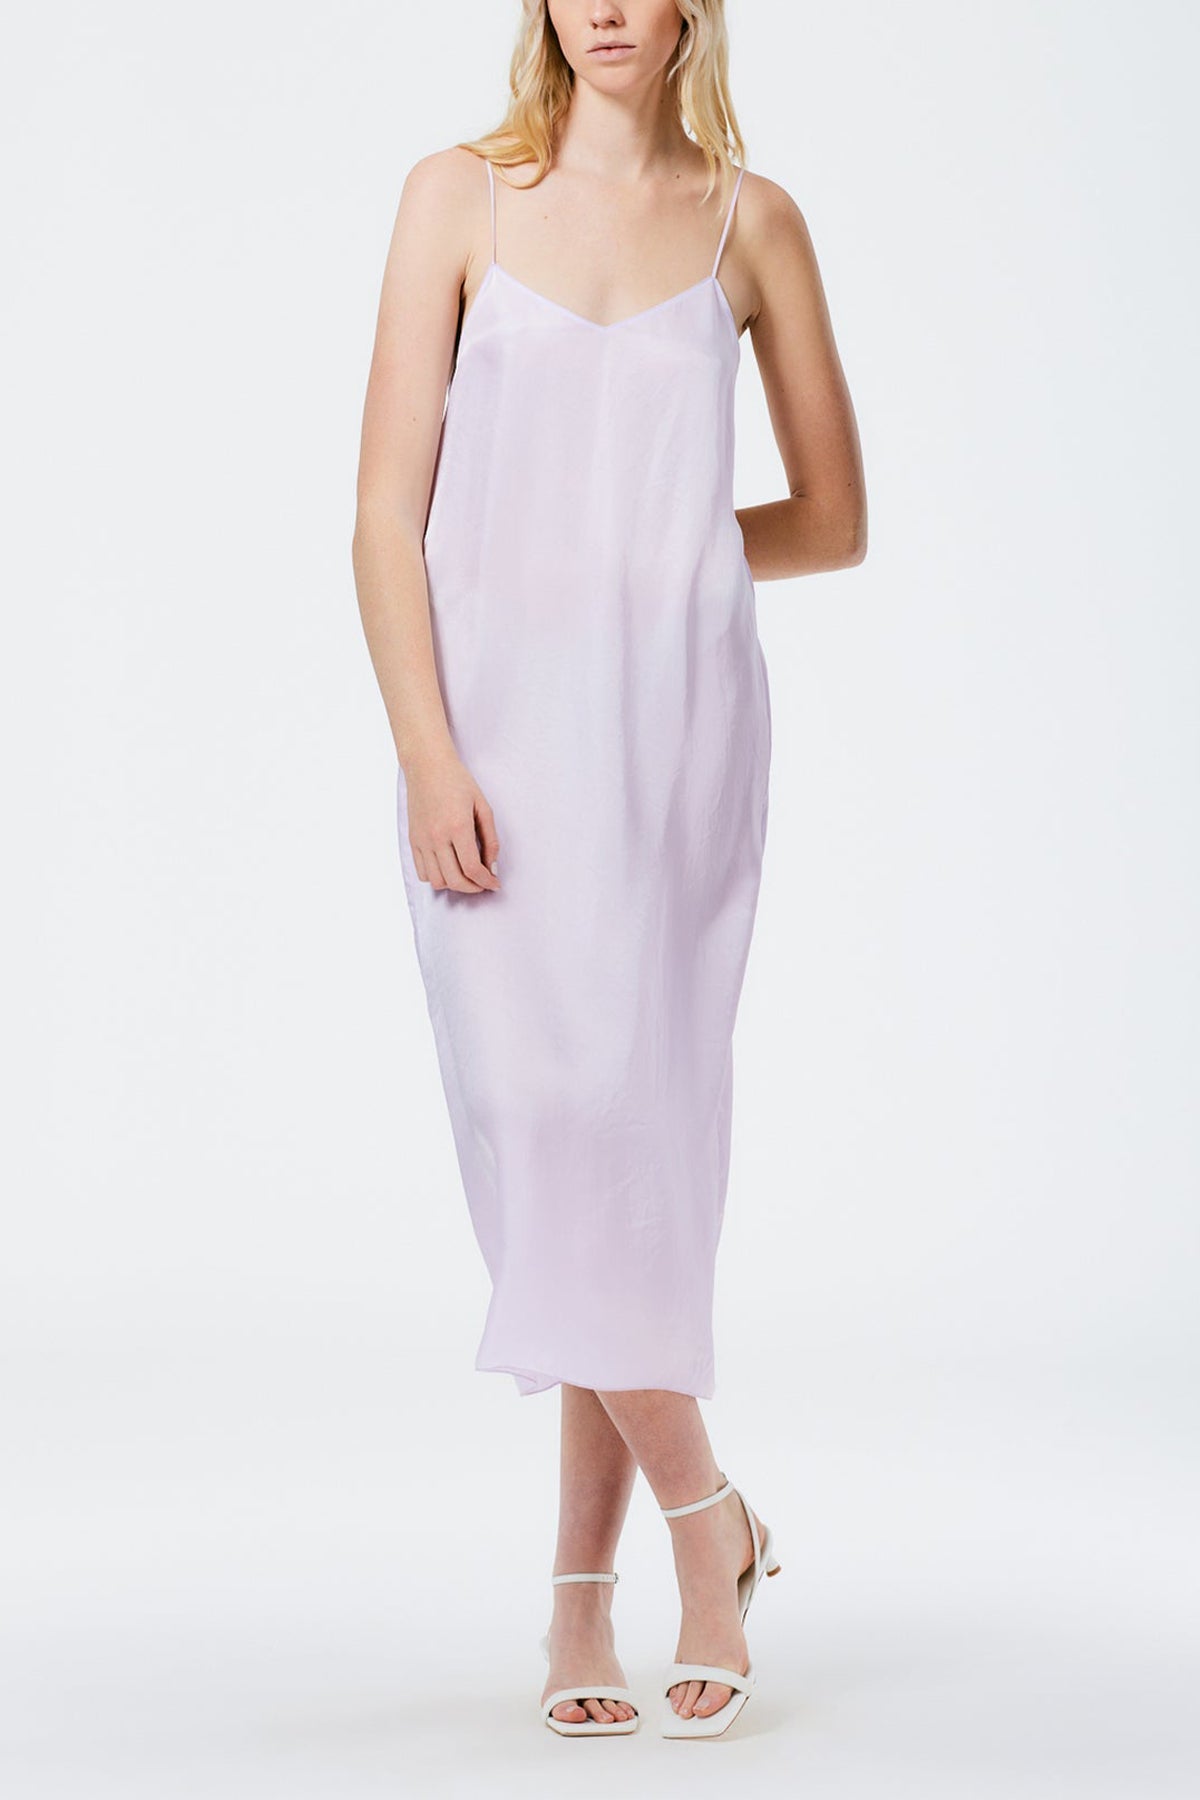 The Slip Dress in Dusty Lavender - shop-olivia.com